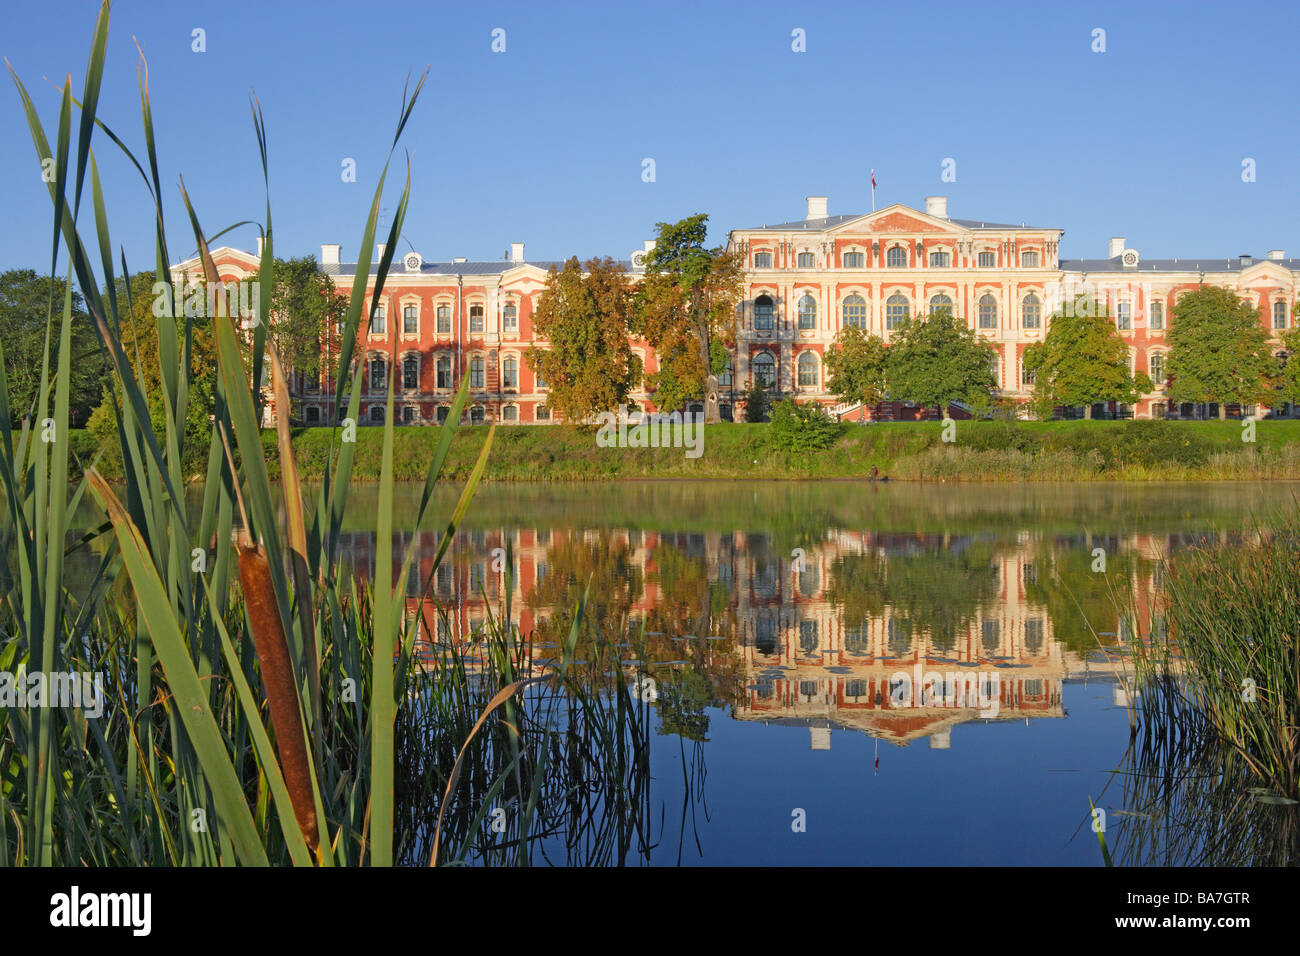 Jelgava palace, built by Italian architect Bartolomeo Rastrelli on river Lielupe in the mid 1800's Stock Photo